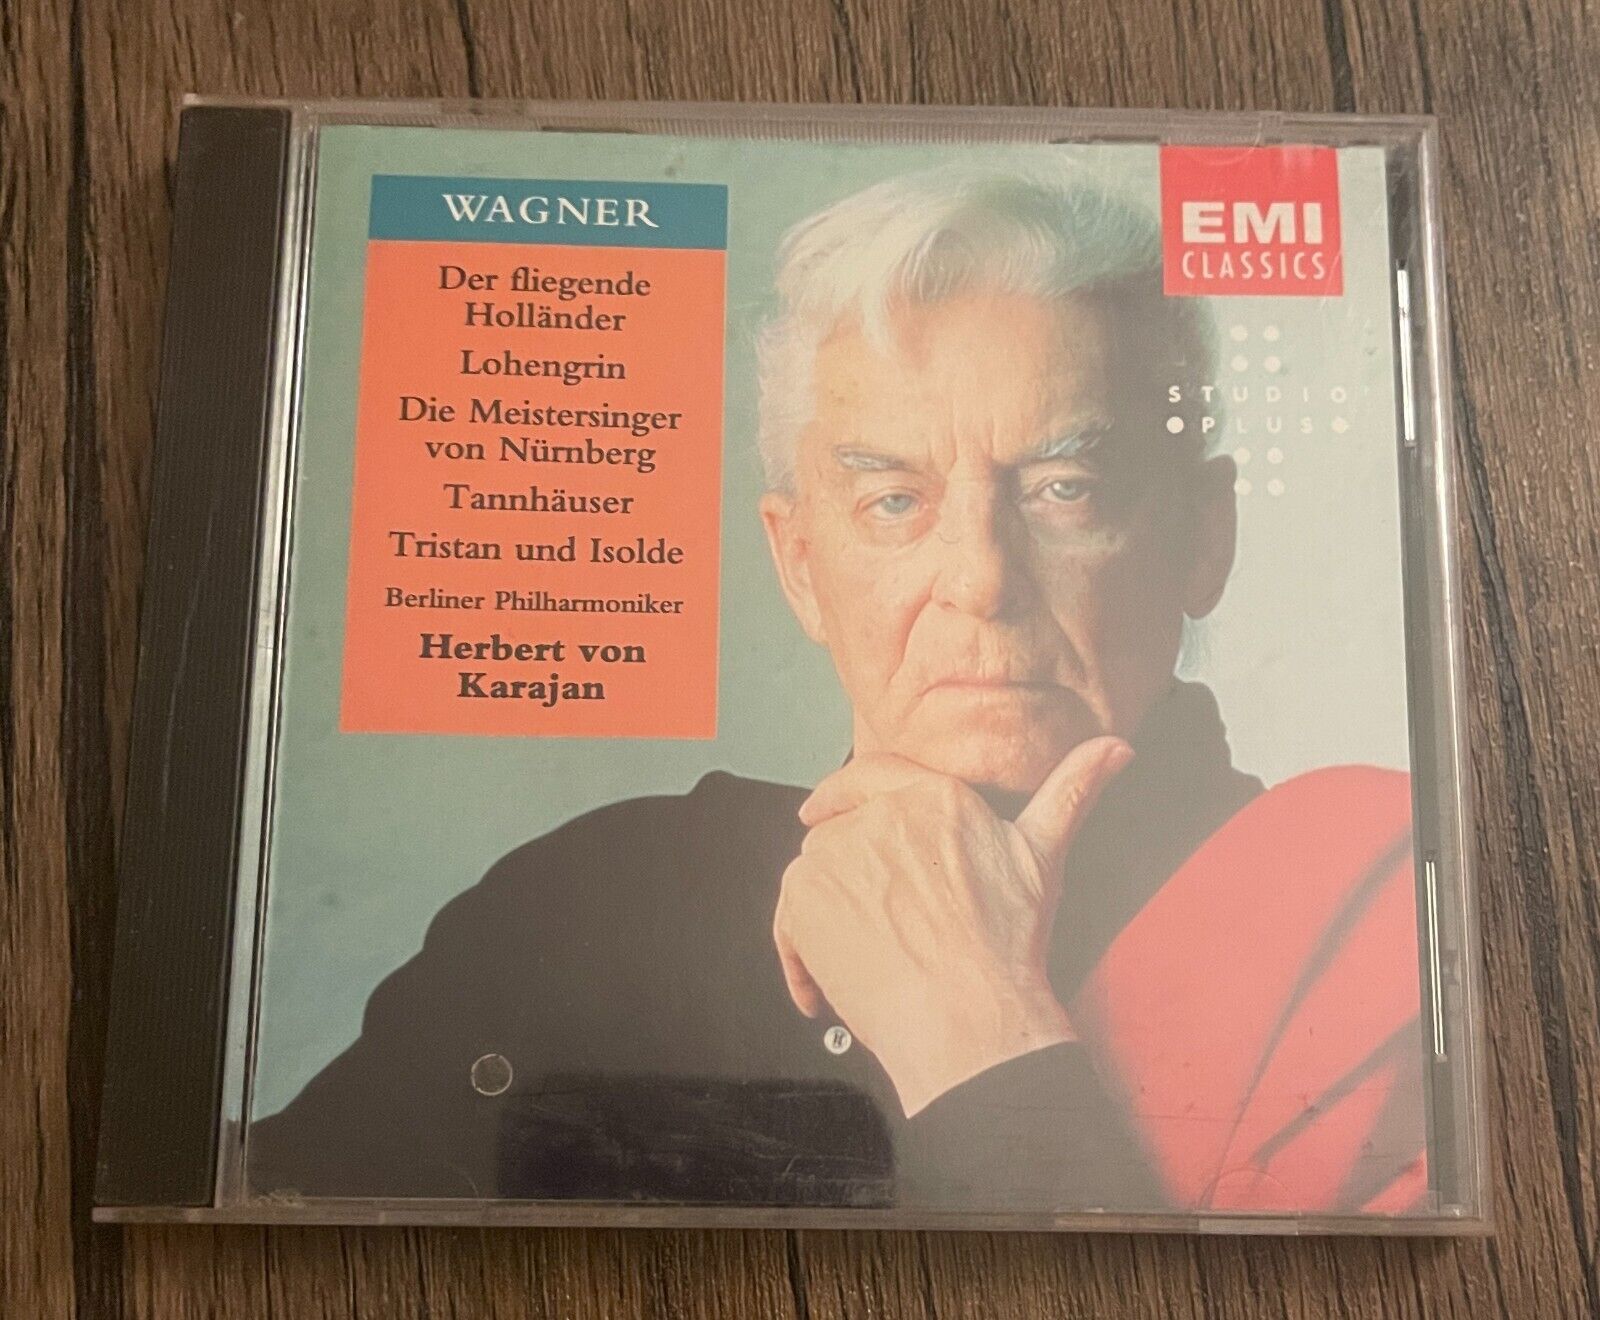 Primary image for Wagner, Herbert von Karajan, Berliner Philharmoniker – Orchestral Music CD, 1992